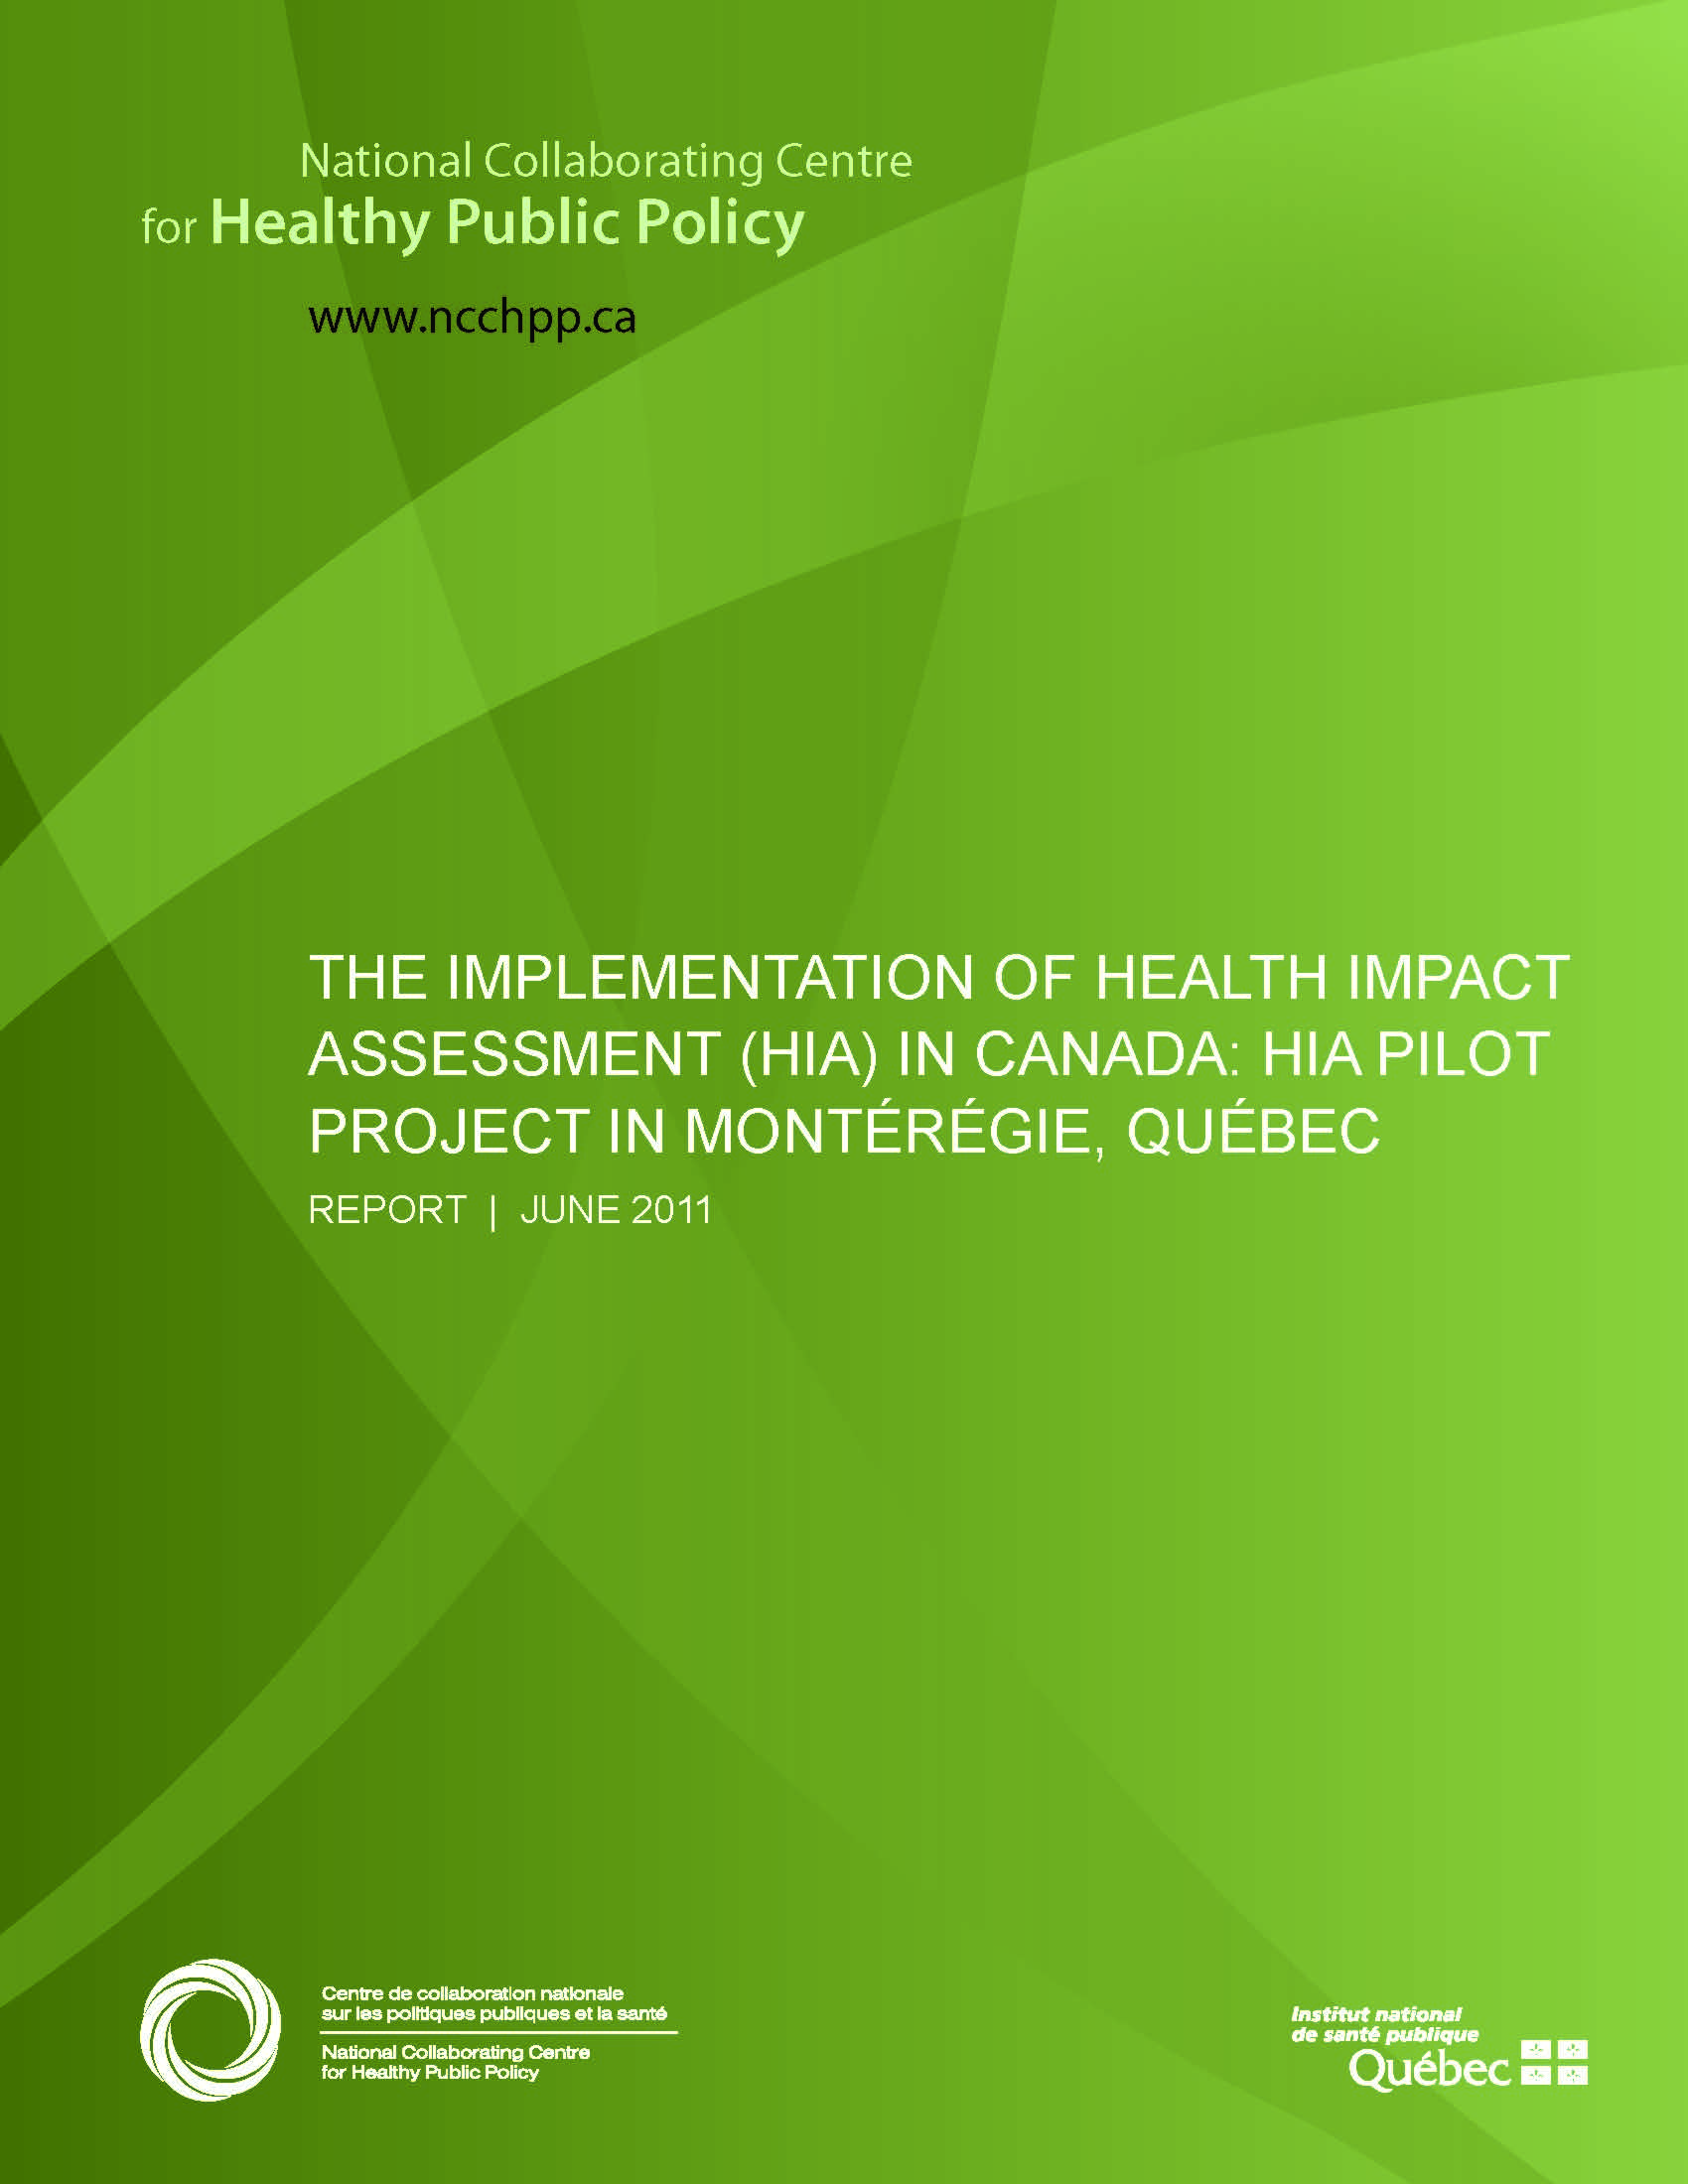 HIA Implementation in Canada: HIA Pilot Project in Montérégie, Québec